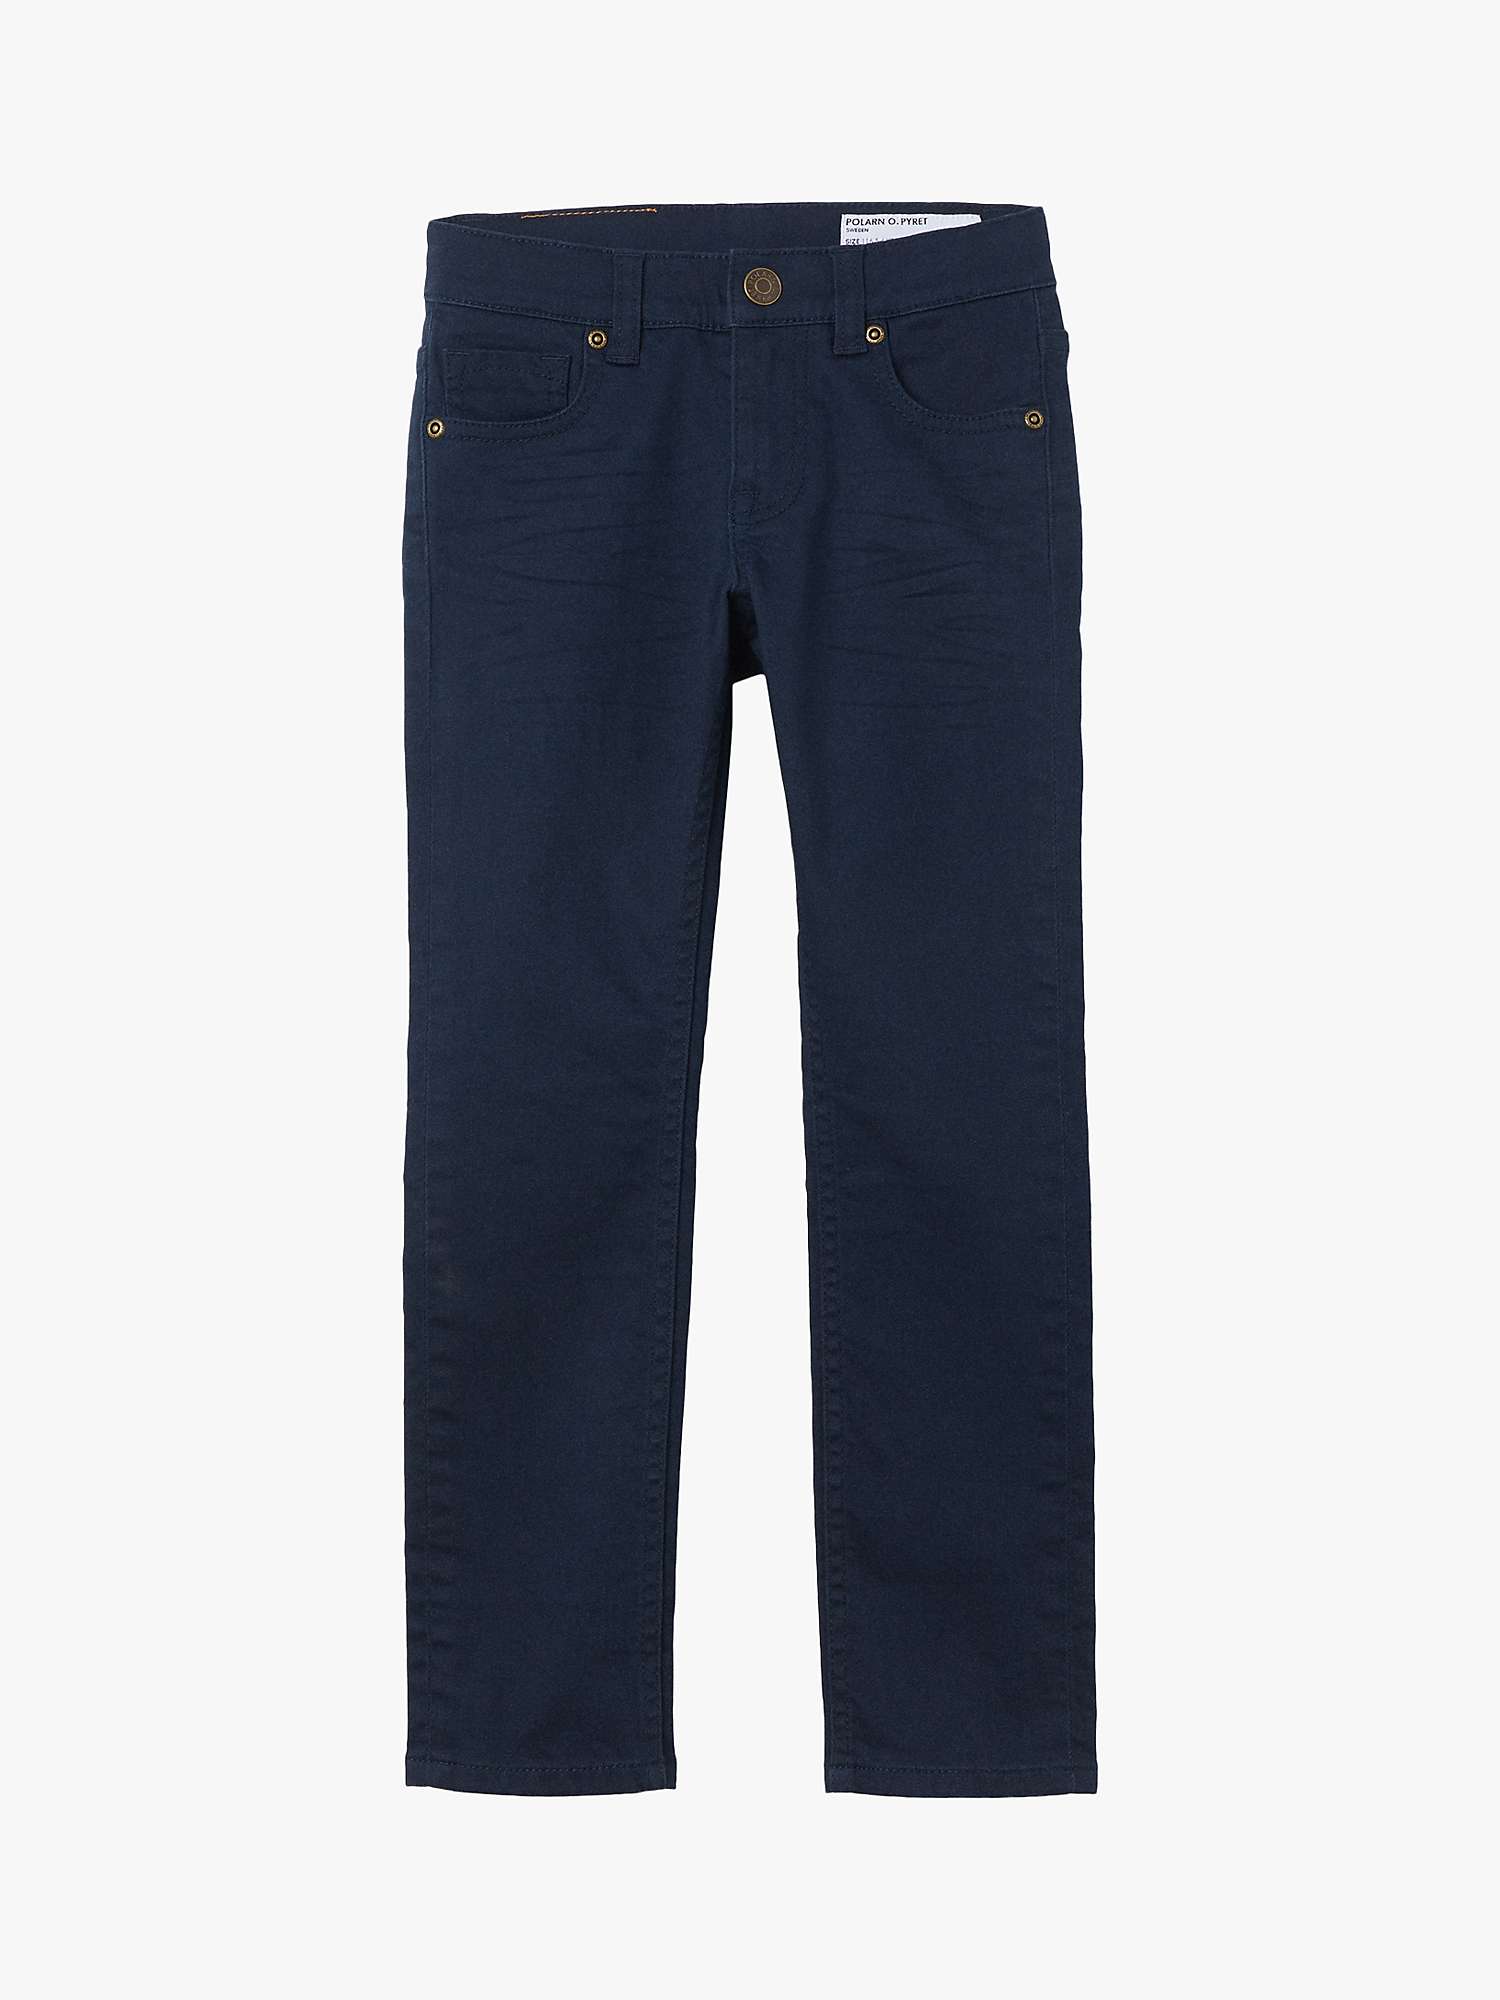 Buy Polarn O. Pyret Kids' Organic Cotton Blend Slim Jeans, Blue Online at johnlewis.com